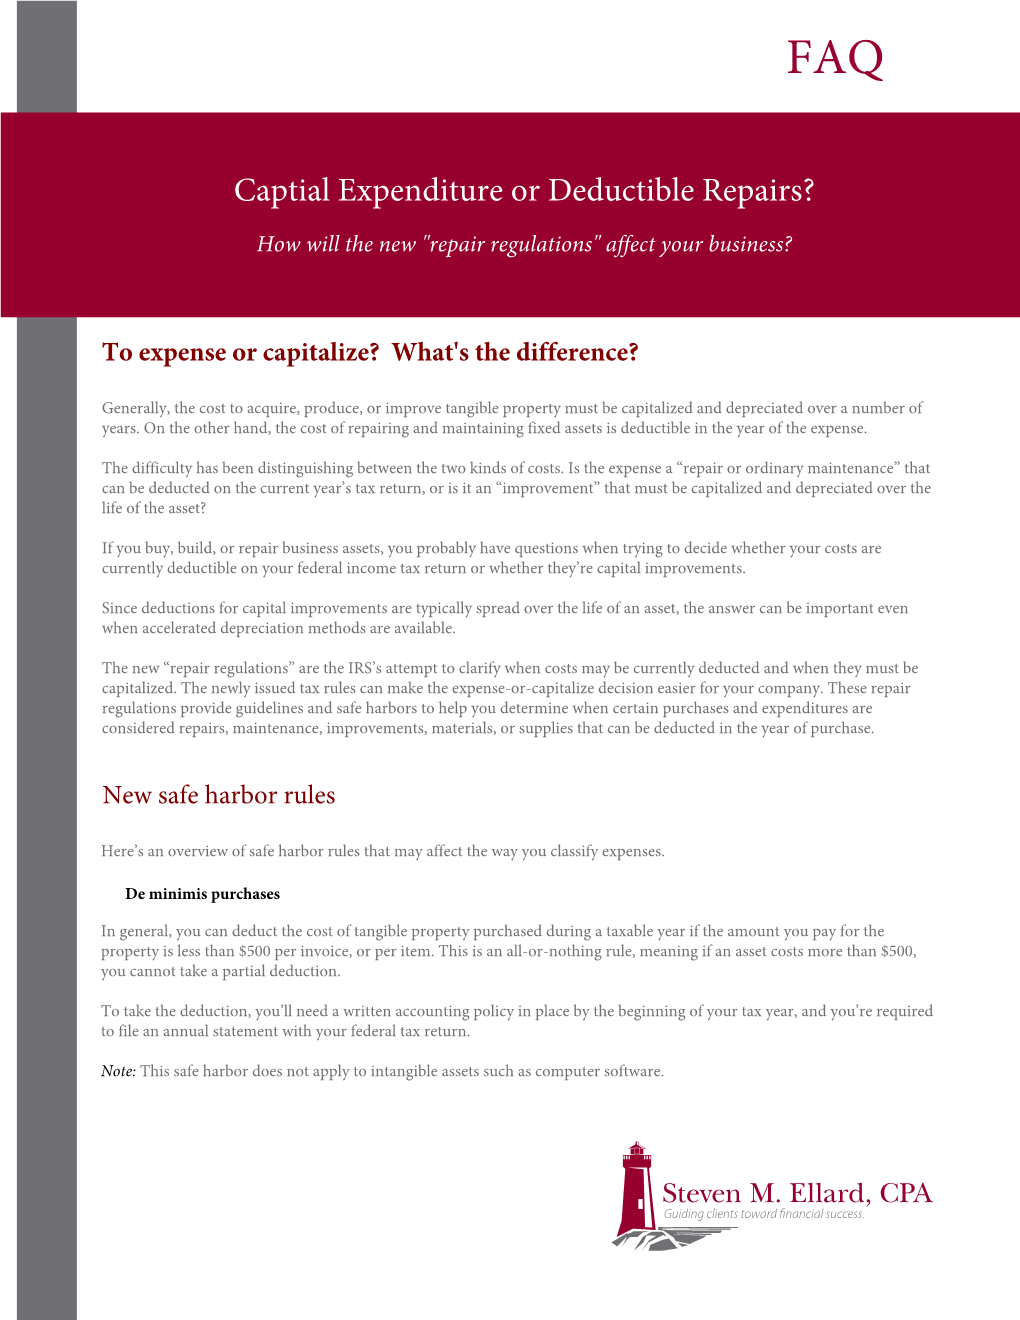 Captial Expenditure Or Deductible Repairs?